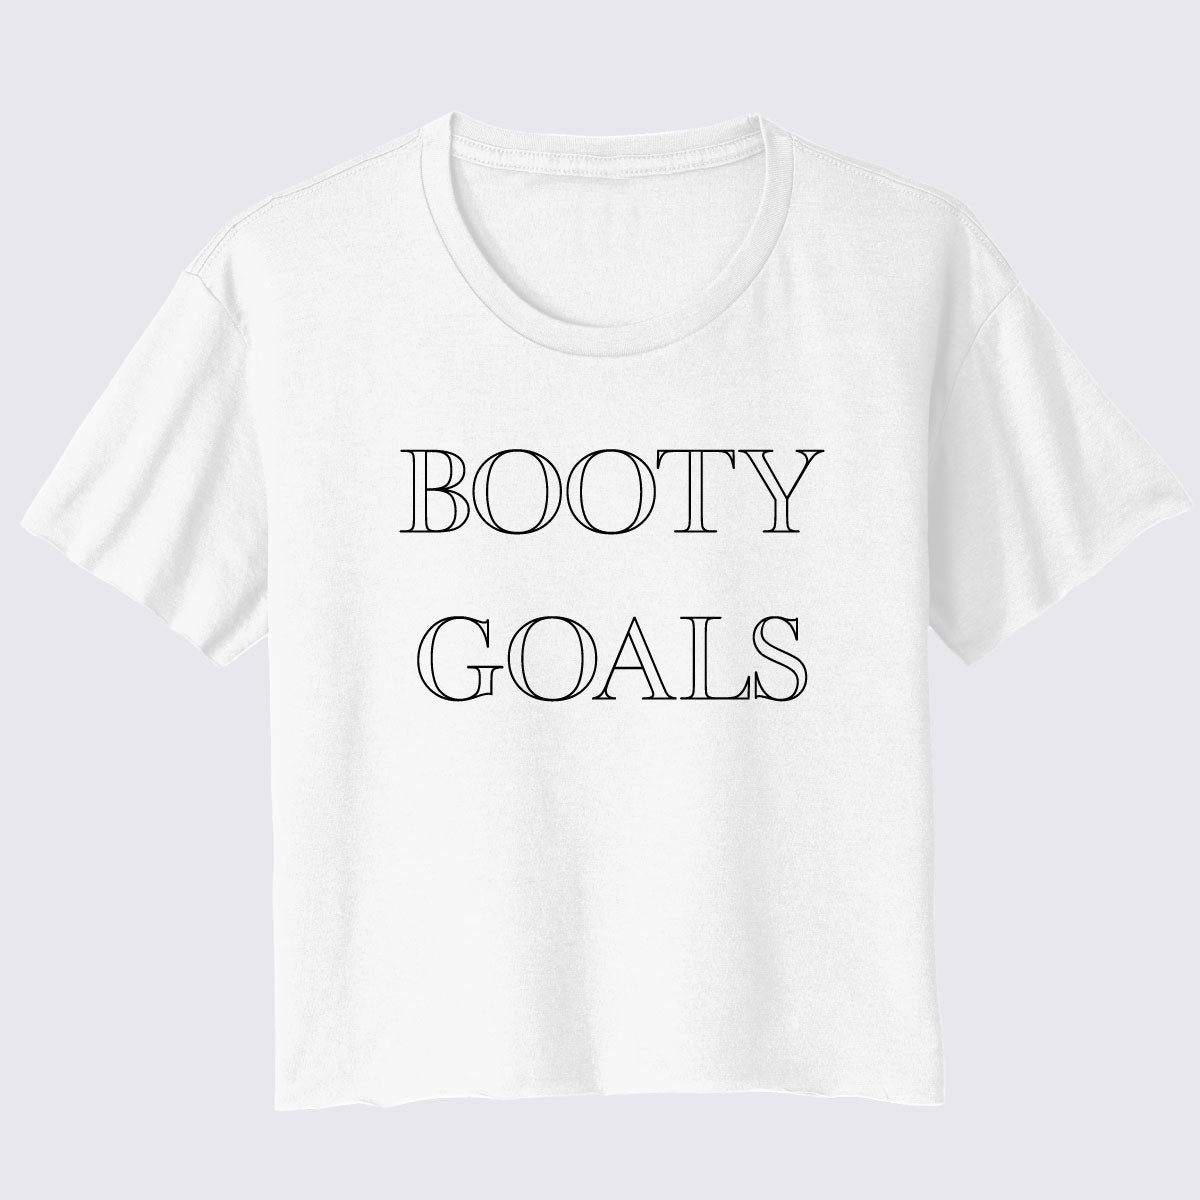 Booty Goals Women’s Festival Cali Crop Tee